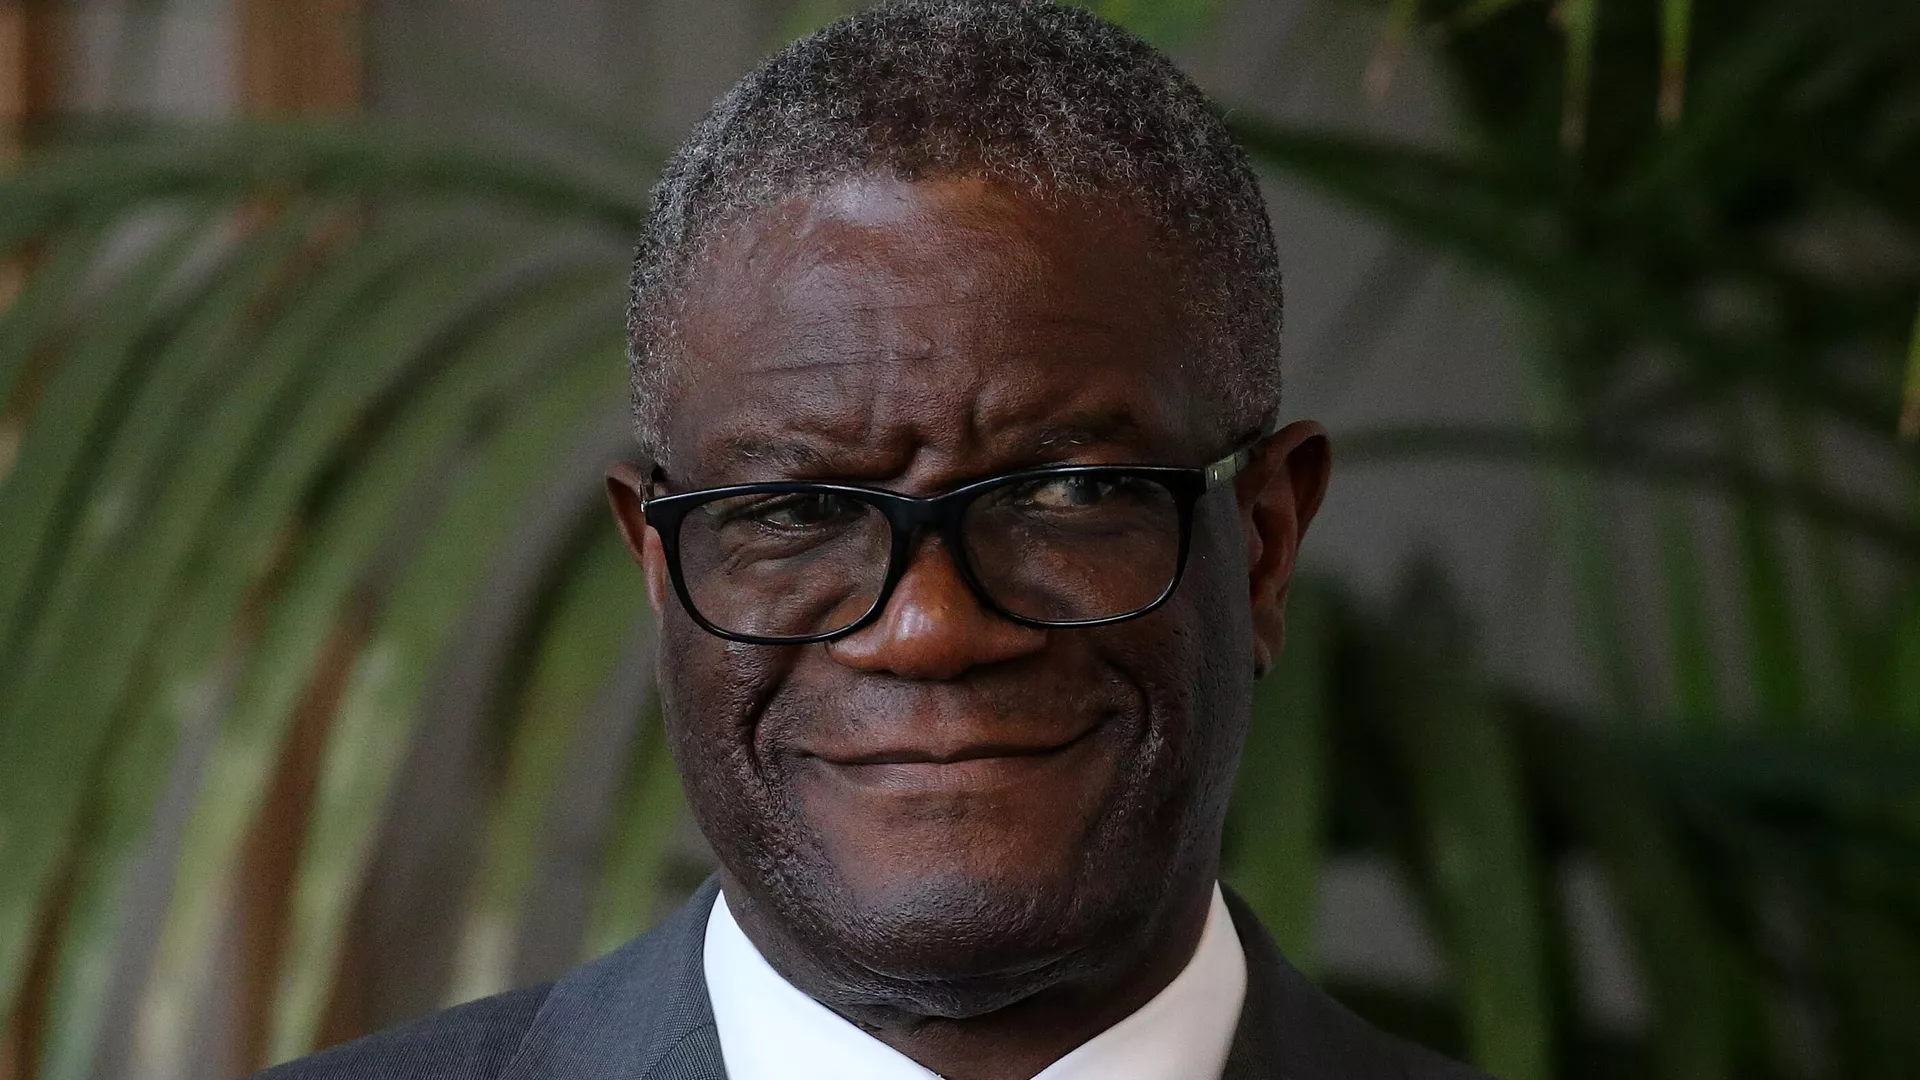 DR Congo Nobel Prize Winner Denis Mukwege to run for Dec. presidential elections